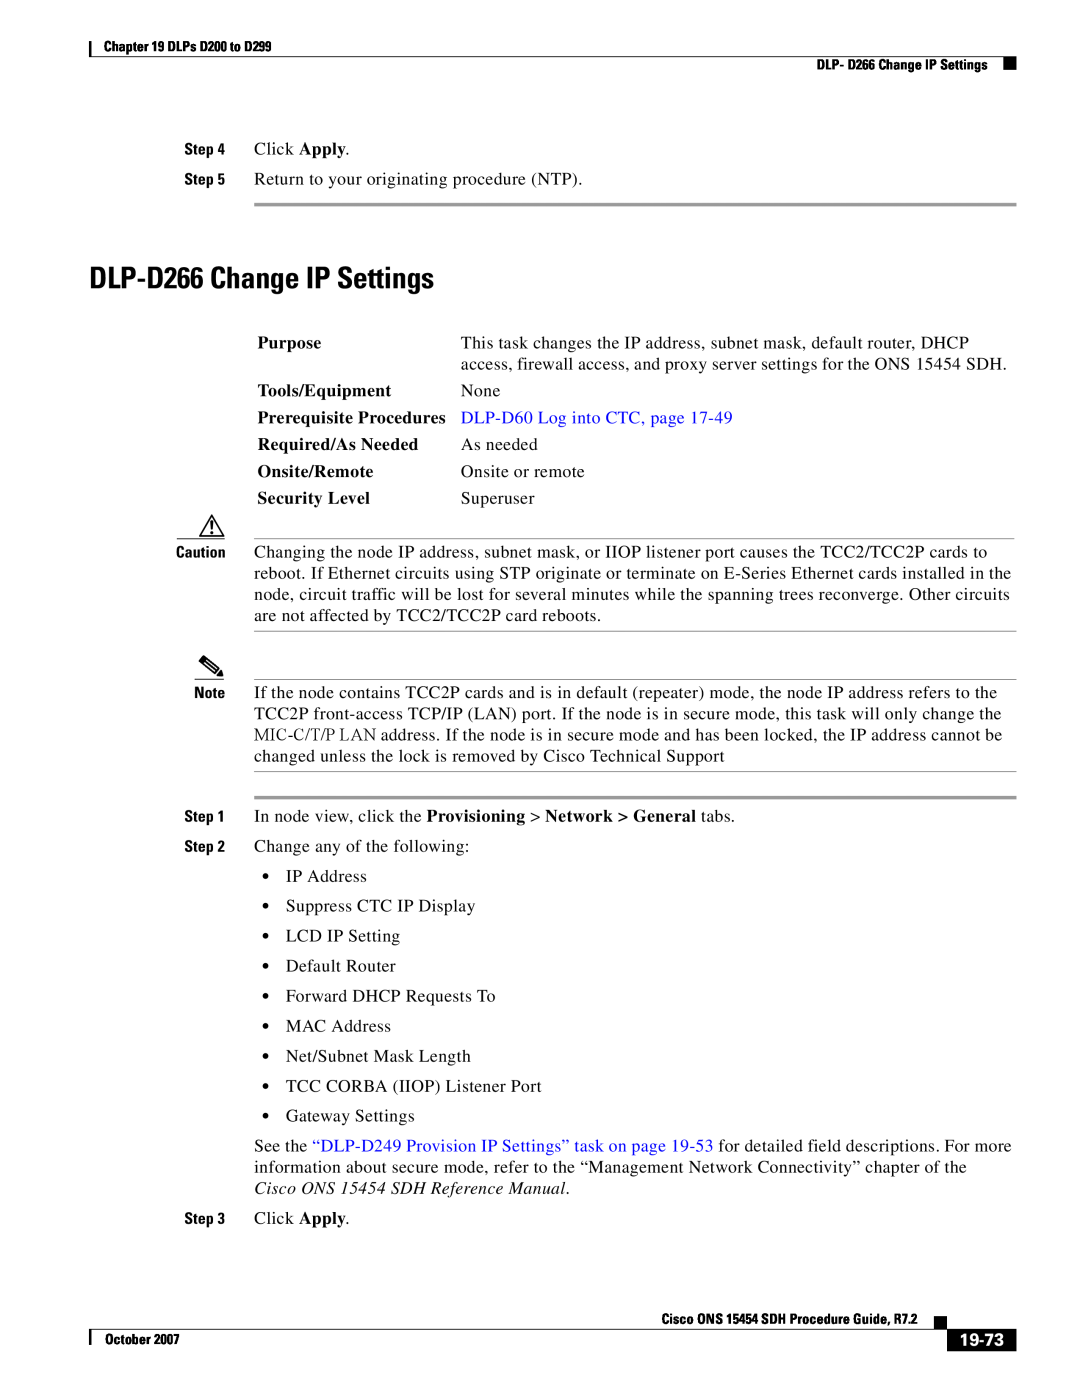 Cisco Systems D200 manual DLP-D266 Change IP Settings, 19-73, DLP-D60 Log into CTC, page 